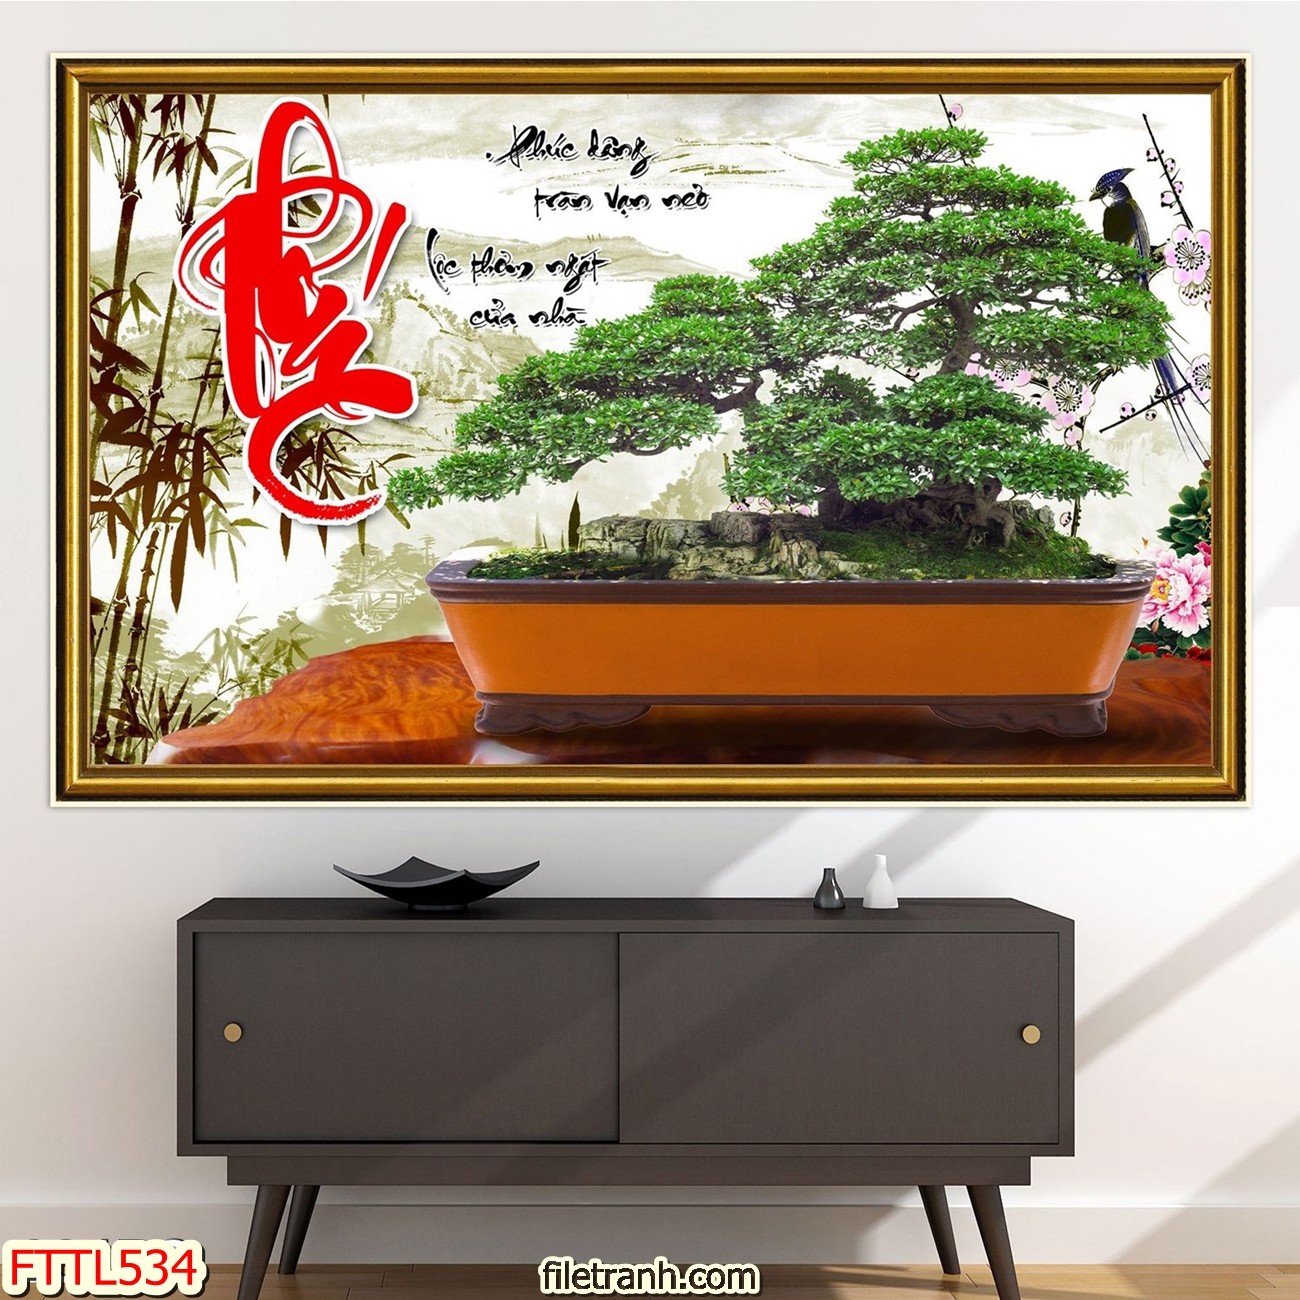 https://filetranh.com/file-tranh-chau-mai-bonsai/file-tranh-chau-mai-bonsai-fttl534.html